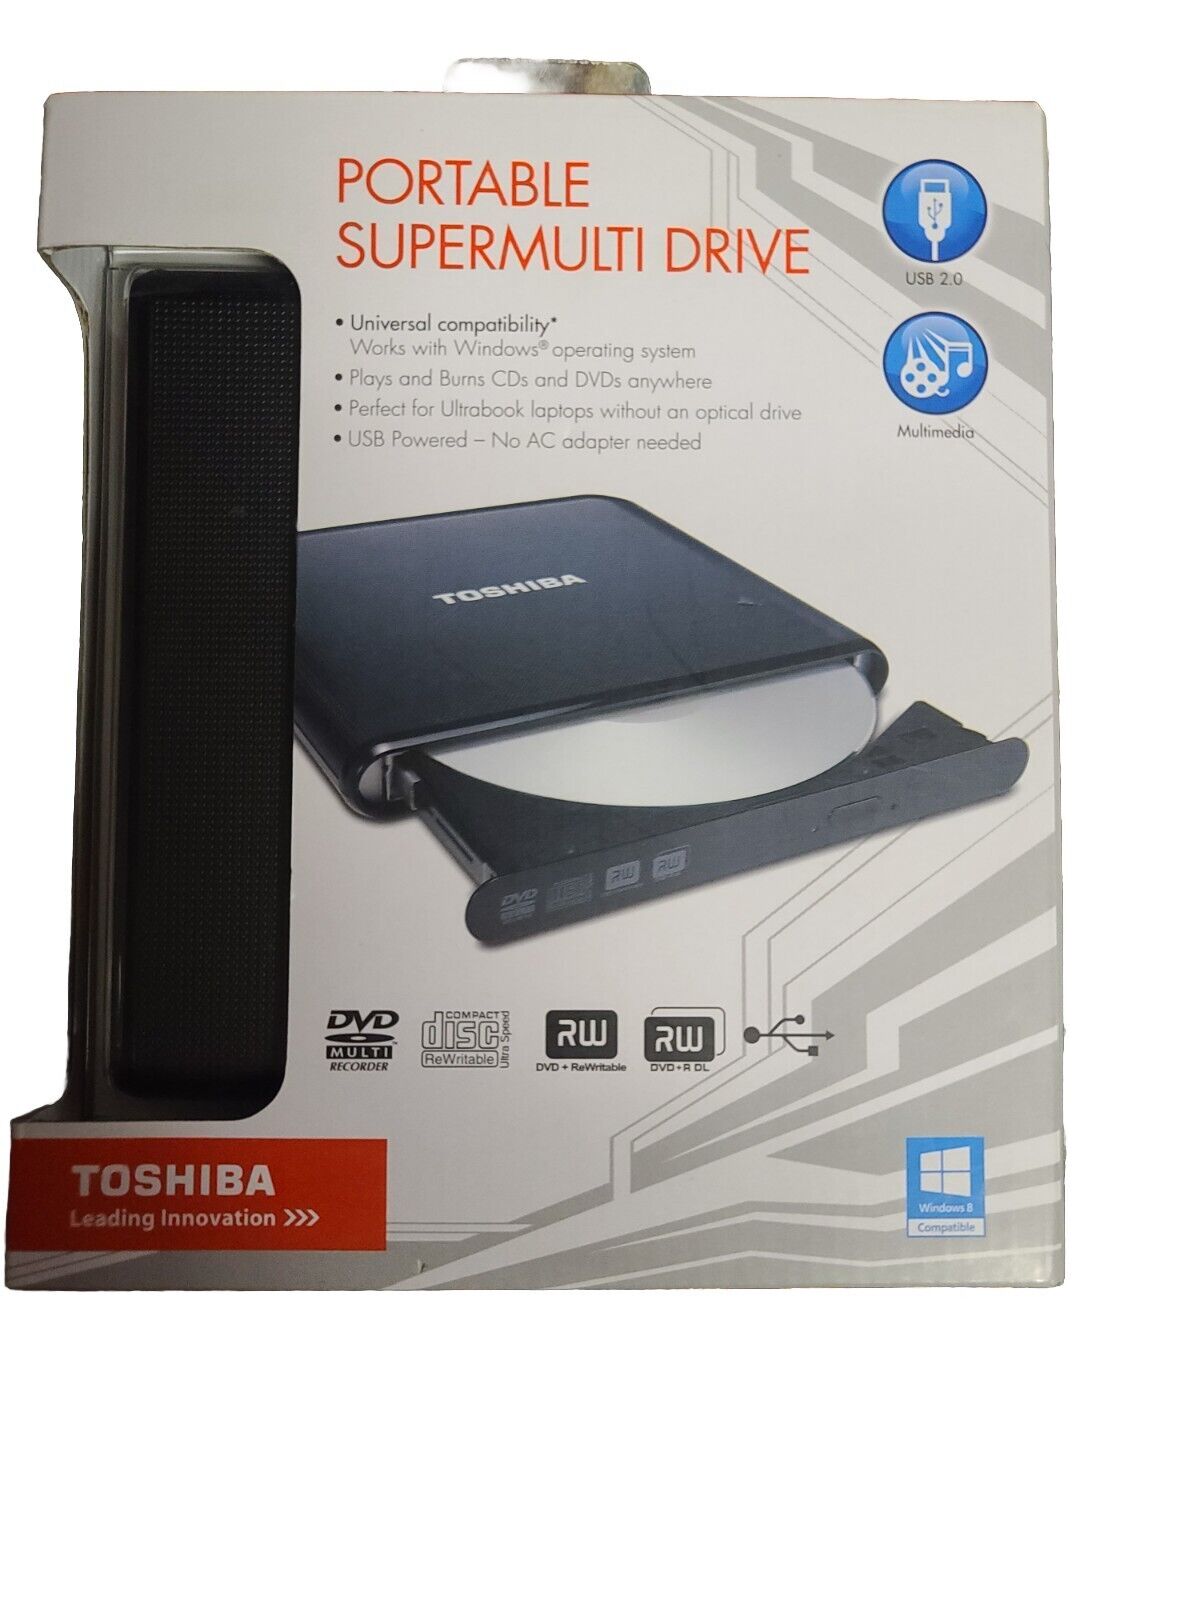 Toshiba Pa3834u-1DV2 USB 2.0 Portable DVD Super Multi Drive 